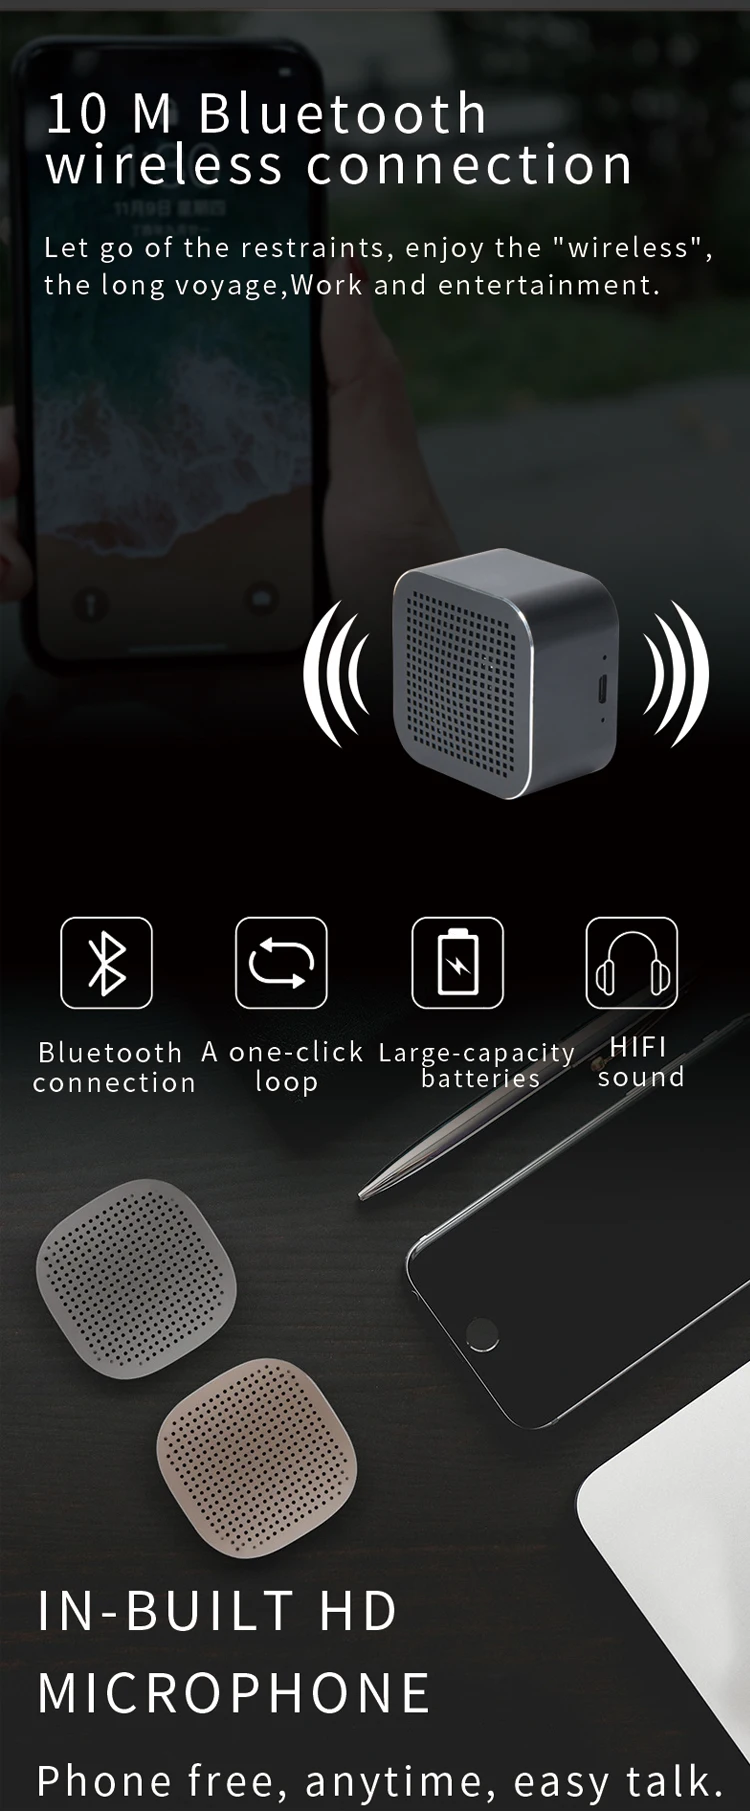 Top Quality Waterproof Mini Rugged Wireless Speaker Portable Square Wireless Speakers Radio